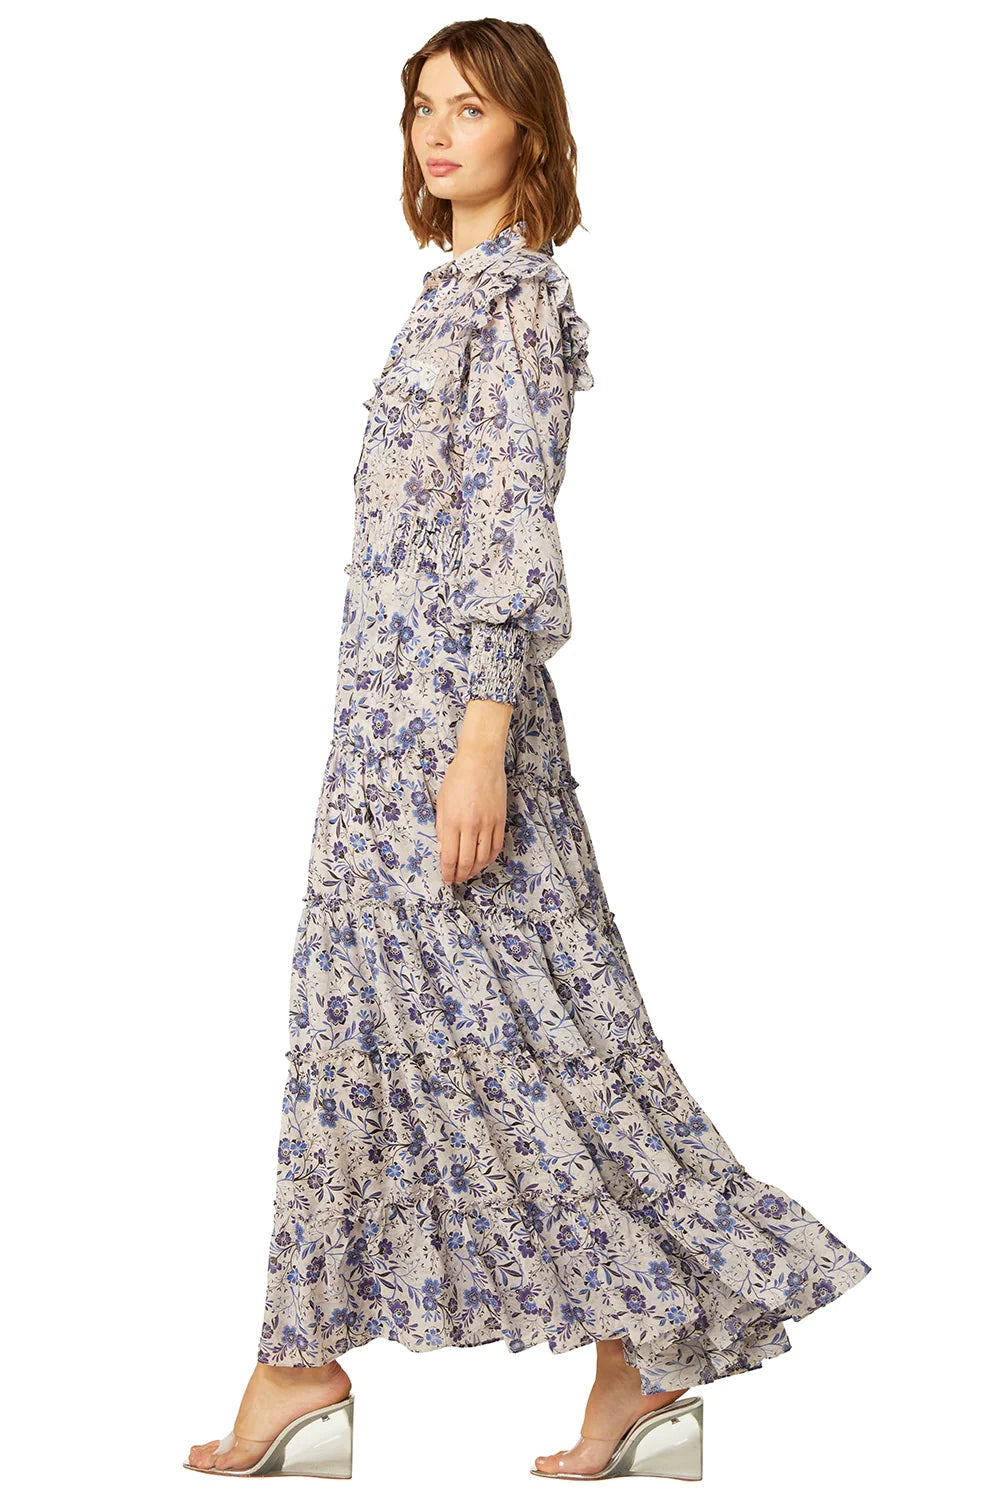 Aydeniz Dress in Cerulean Floral